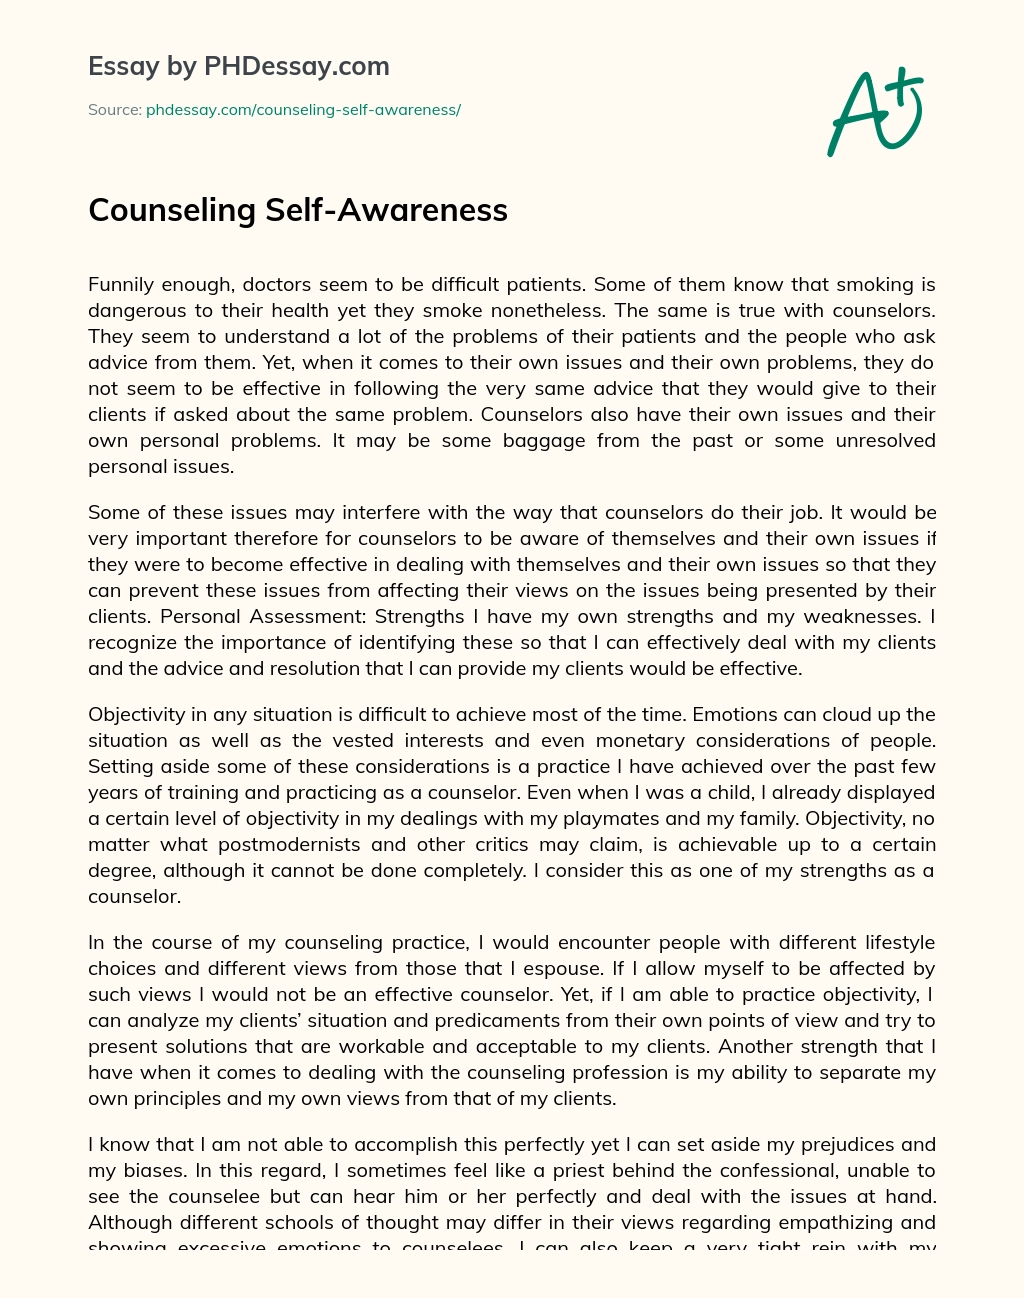 Counseling Self-Awareness essay